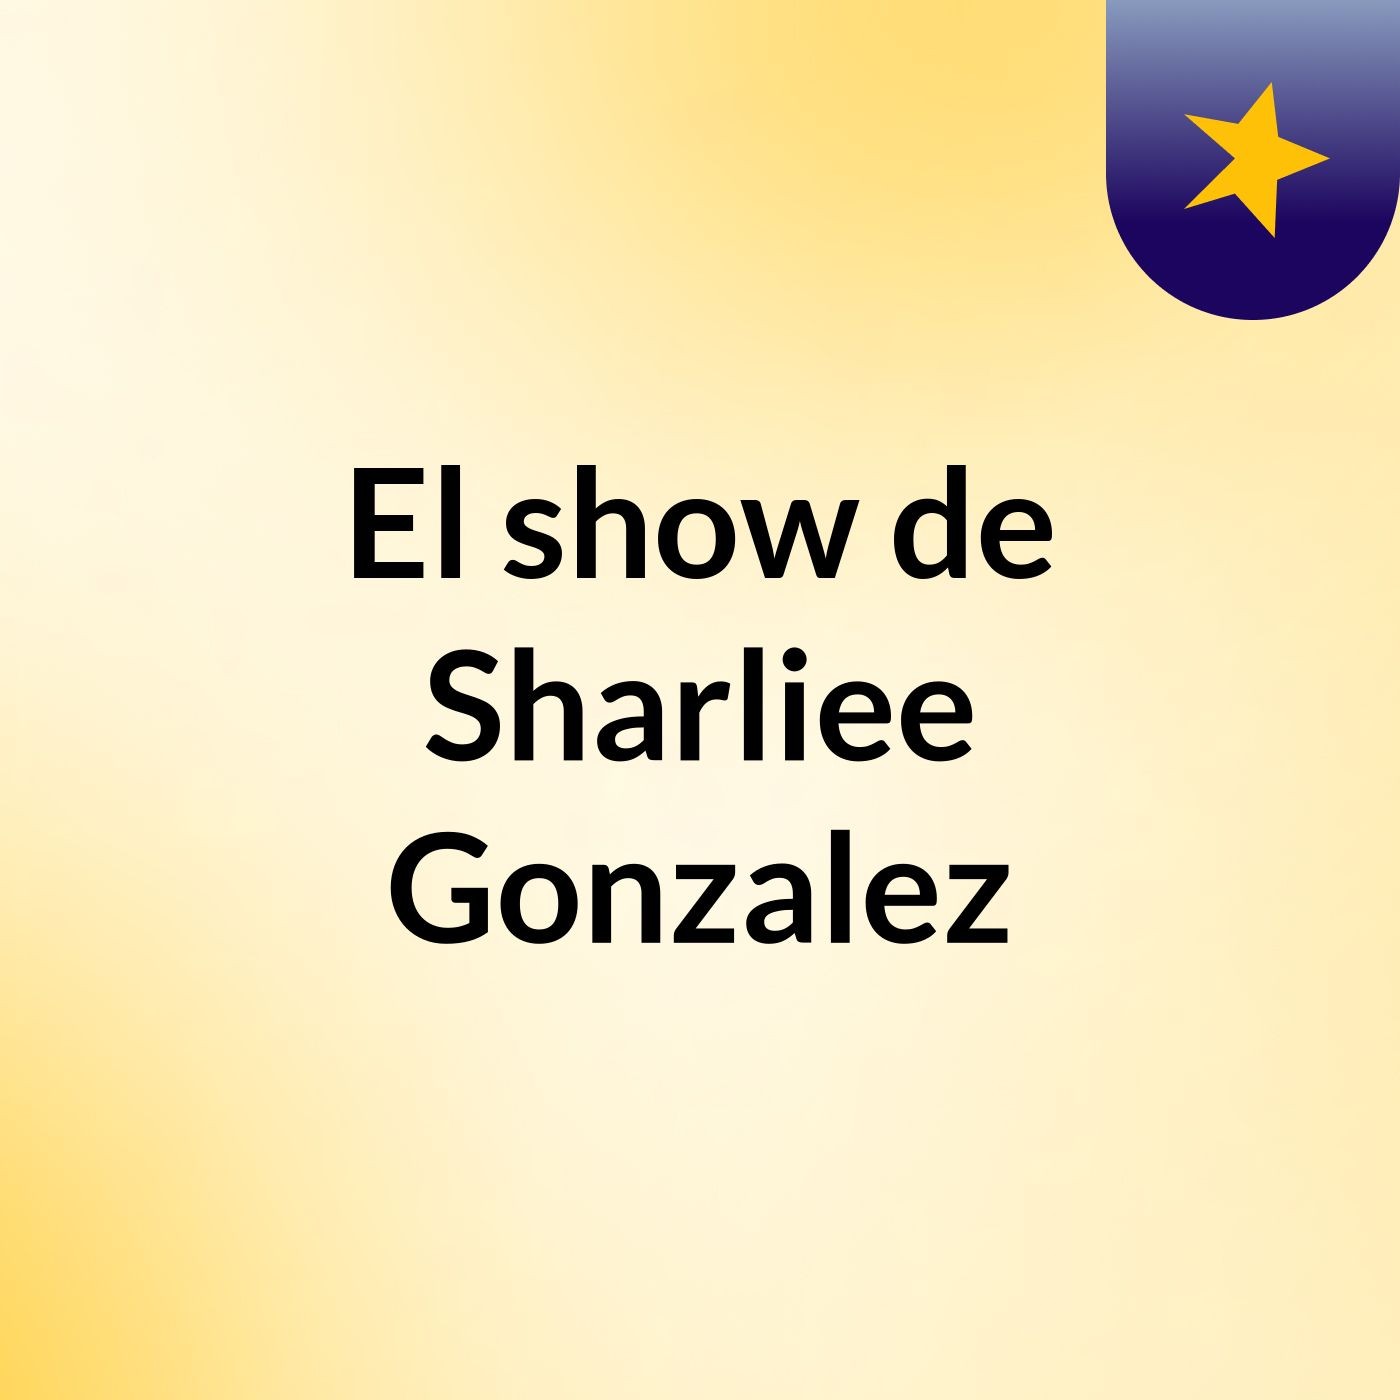 El show de Sharliee Gonzalez